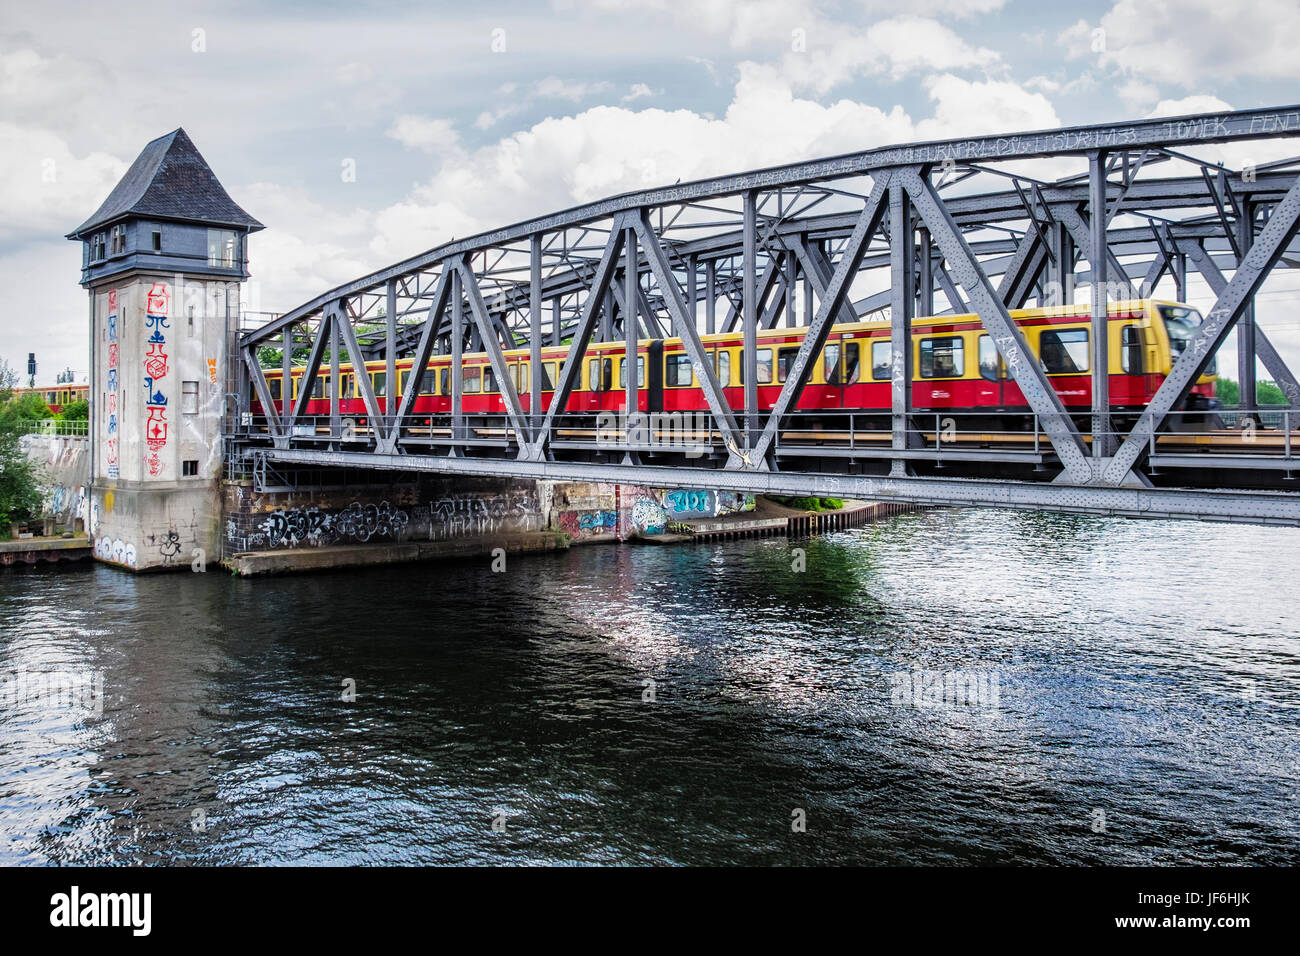 Berlin Treptower Park, S bahn train crosses Old Iron railway bridge and tower over the river Spree Stock Photo